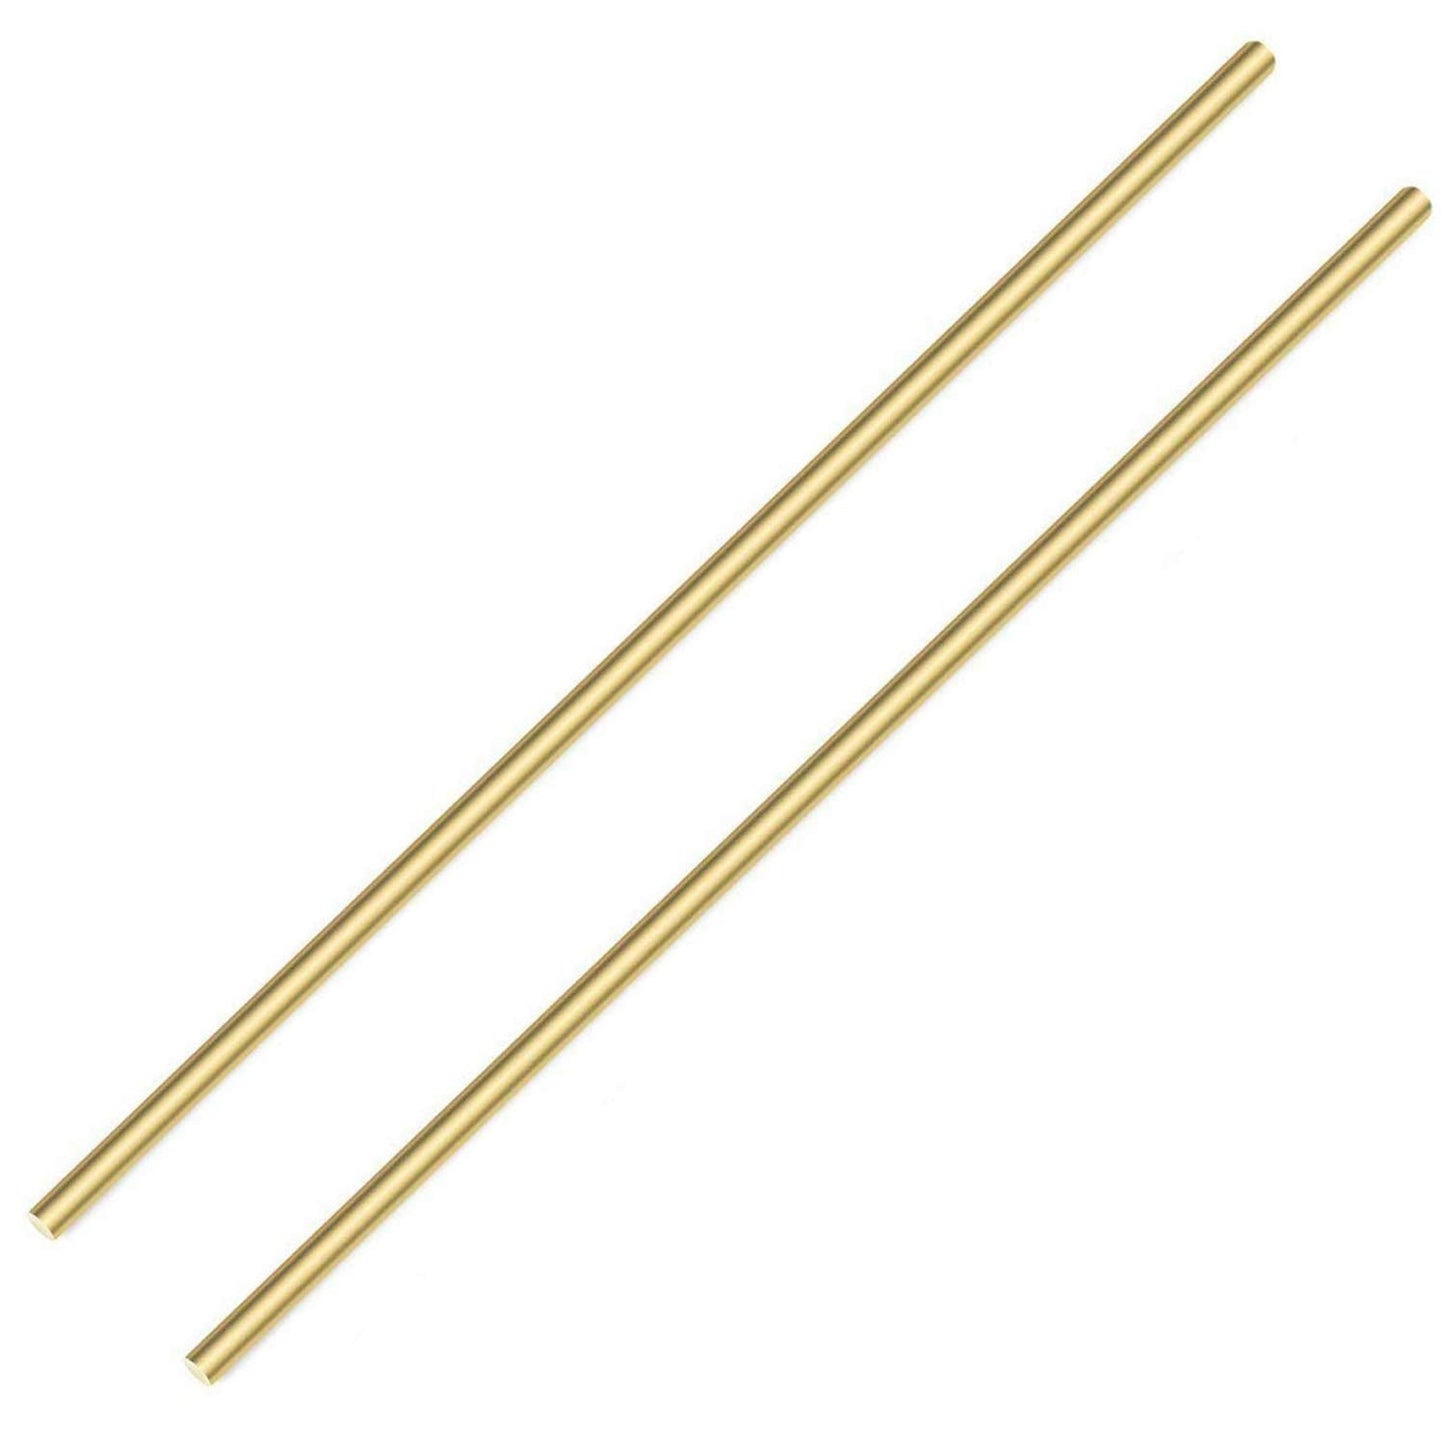 8 PCS 4Mm/ 5/32 Inch Brass Rod Brass round Stock Lathe Bar Stock Kit Brass Rod Stock Solid Brass Rod, 4Mm/ 5/32 Inch Diameter 12 Inch in Length